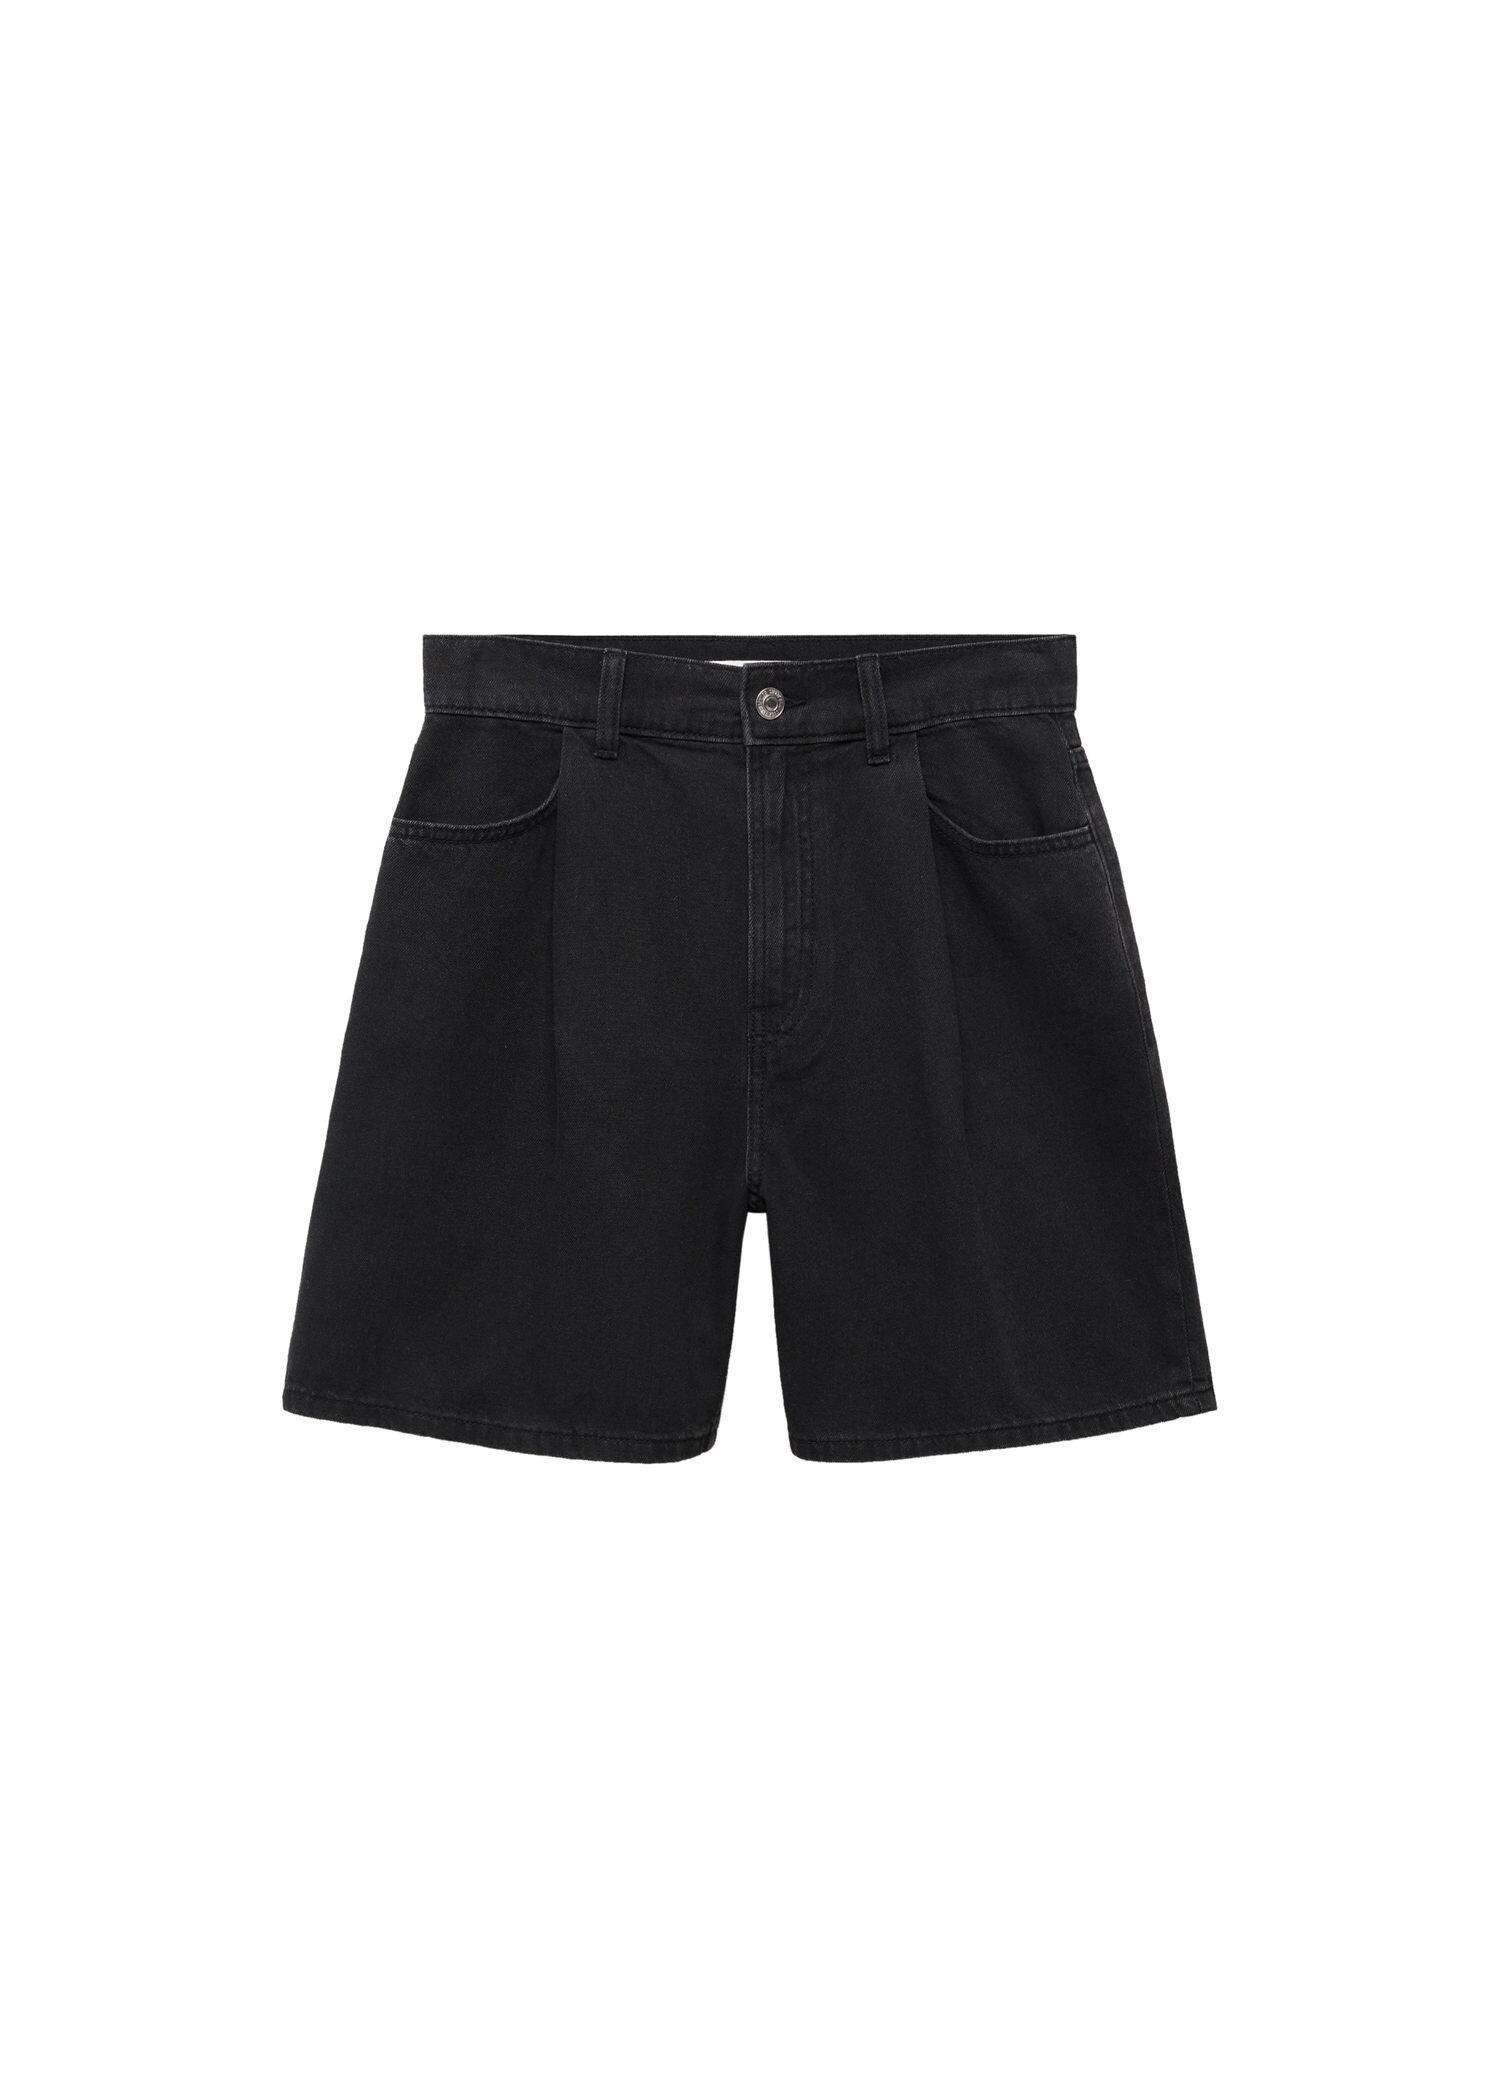 Mango - Grey Denim Shorts With Pleats